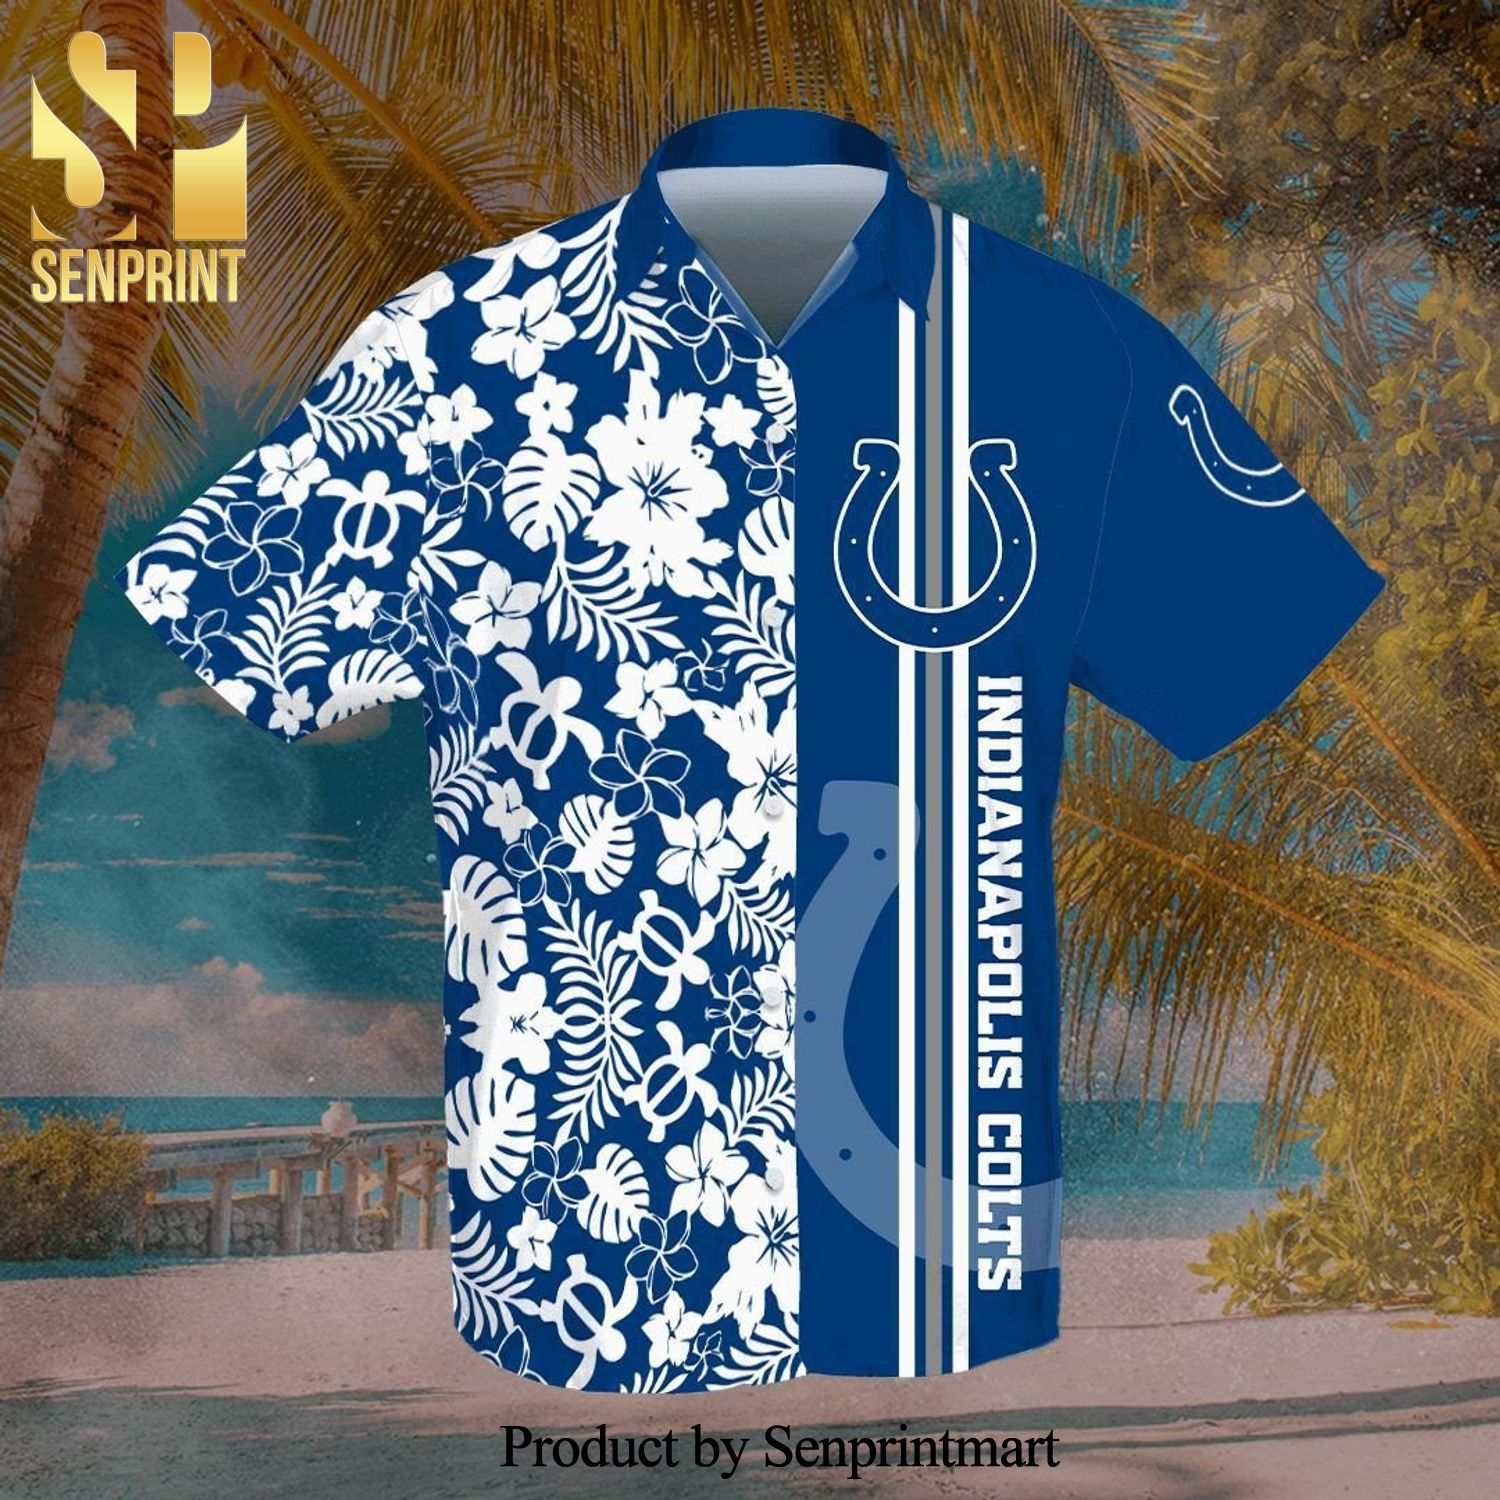 Indianapolis Colts Full Printing Flowery Short Sleeve Dress Shirt Hawaiian Summer Aloha Beach Shirt – Navy